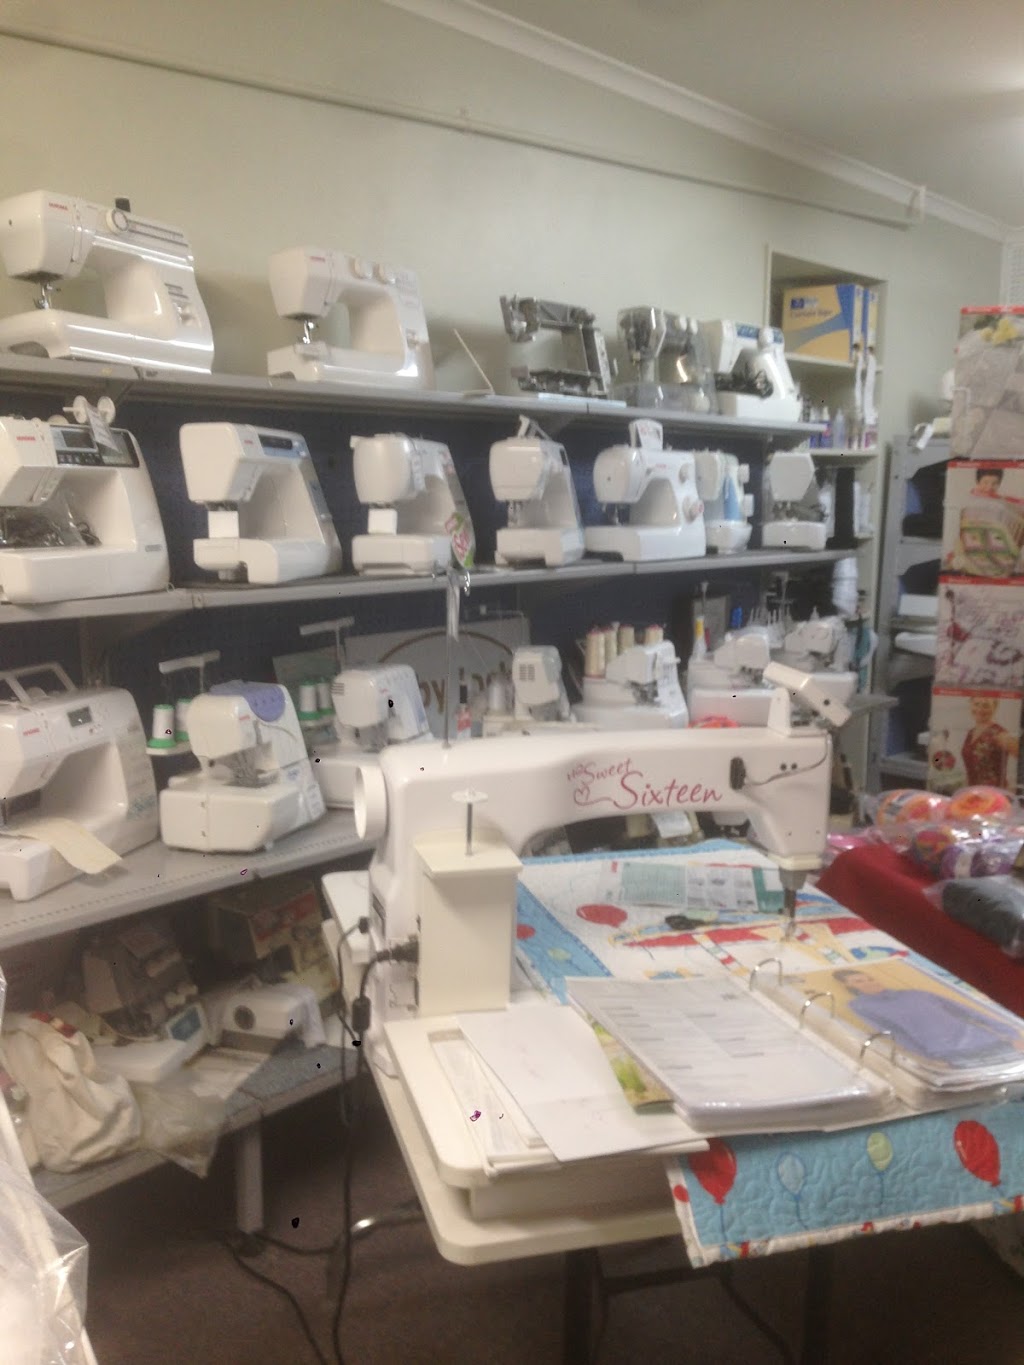 Shellys Sewing Centre | home goods store | 115 Auburn St, Goulburn NSW 2580, Australia | 0248221266 OR +61 2 4822 1266